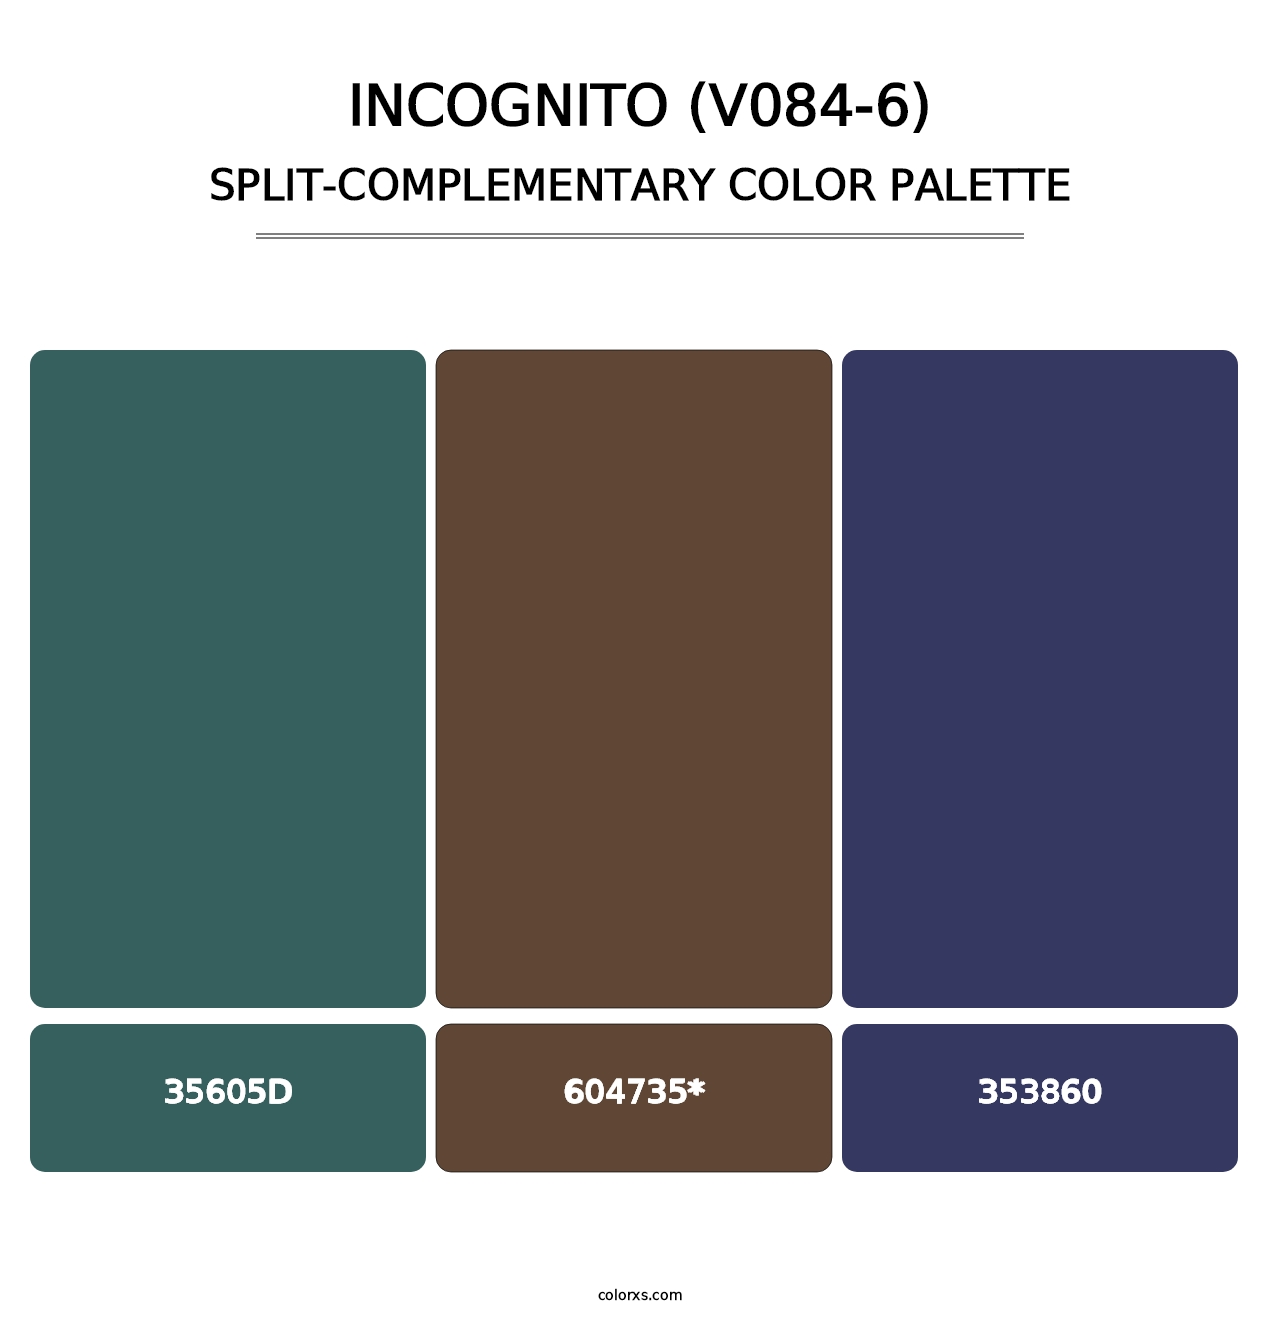 Incognito (V084-6) - Split-Complementary Color Palette